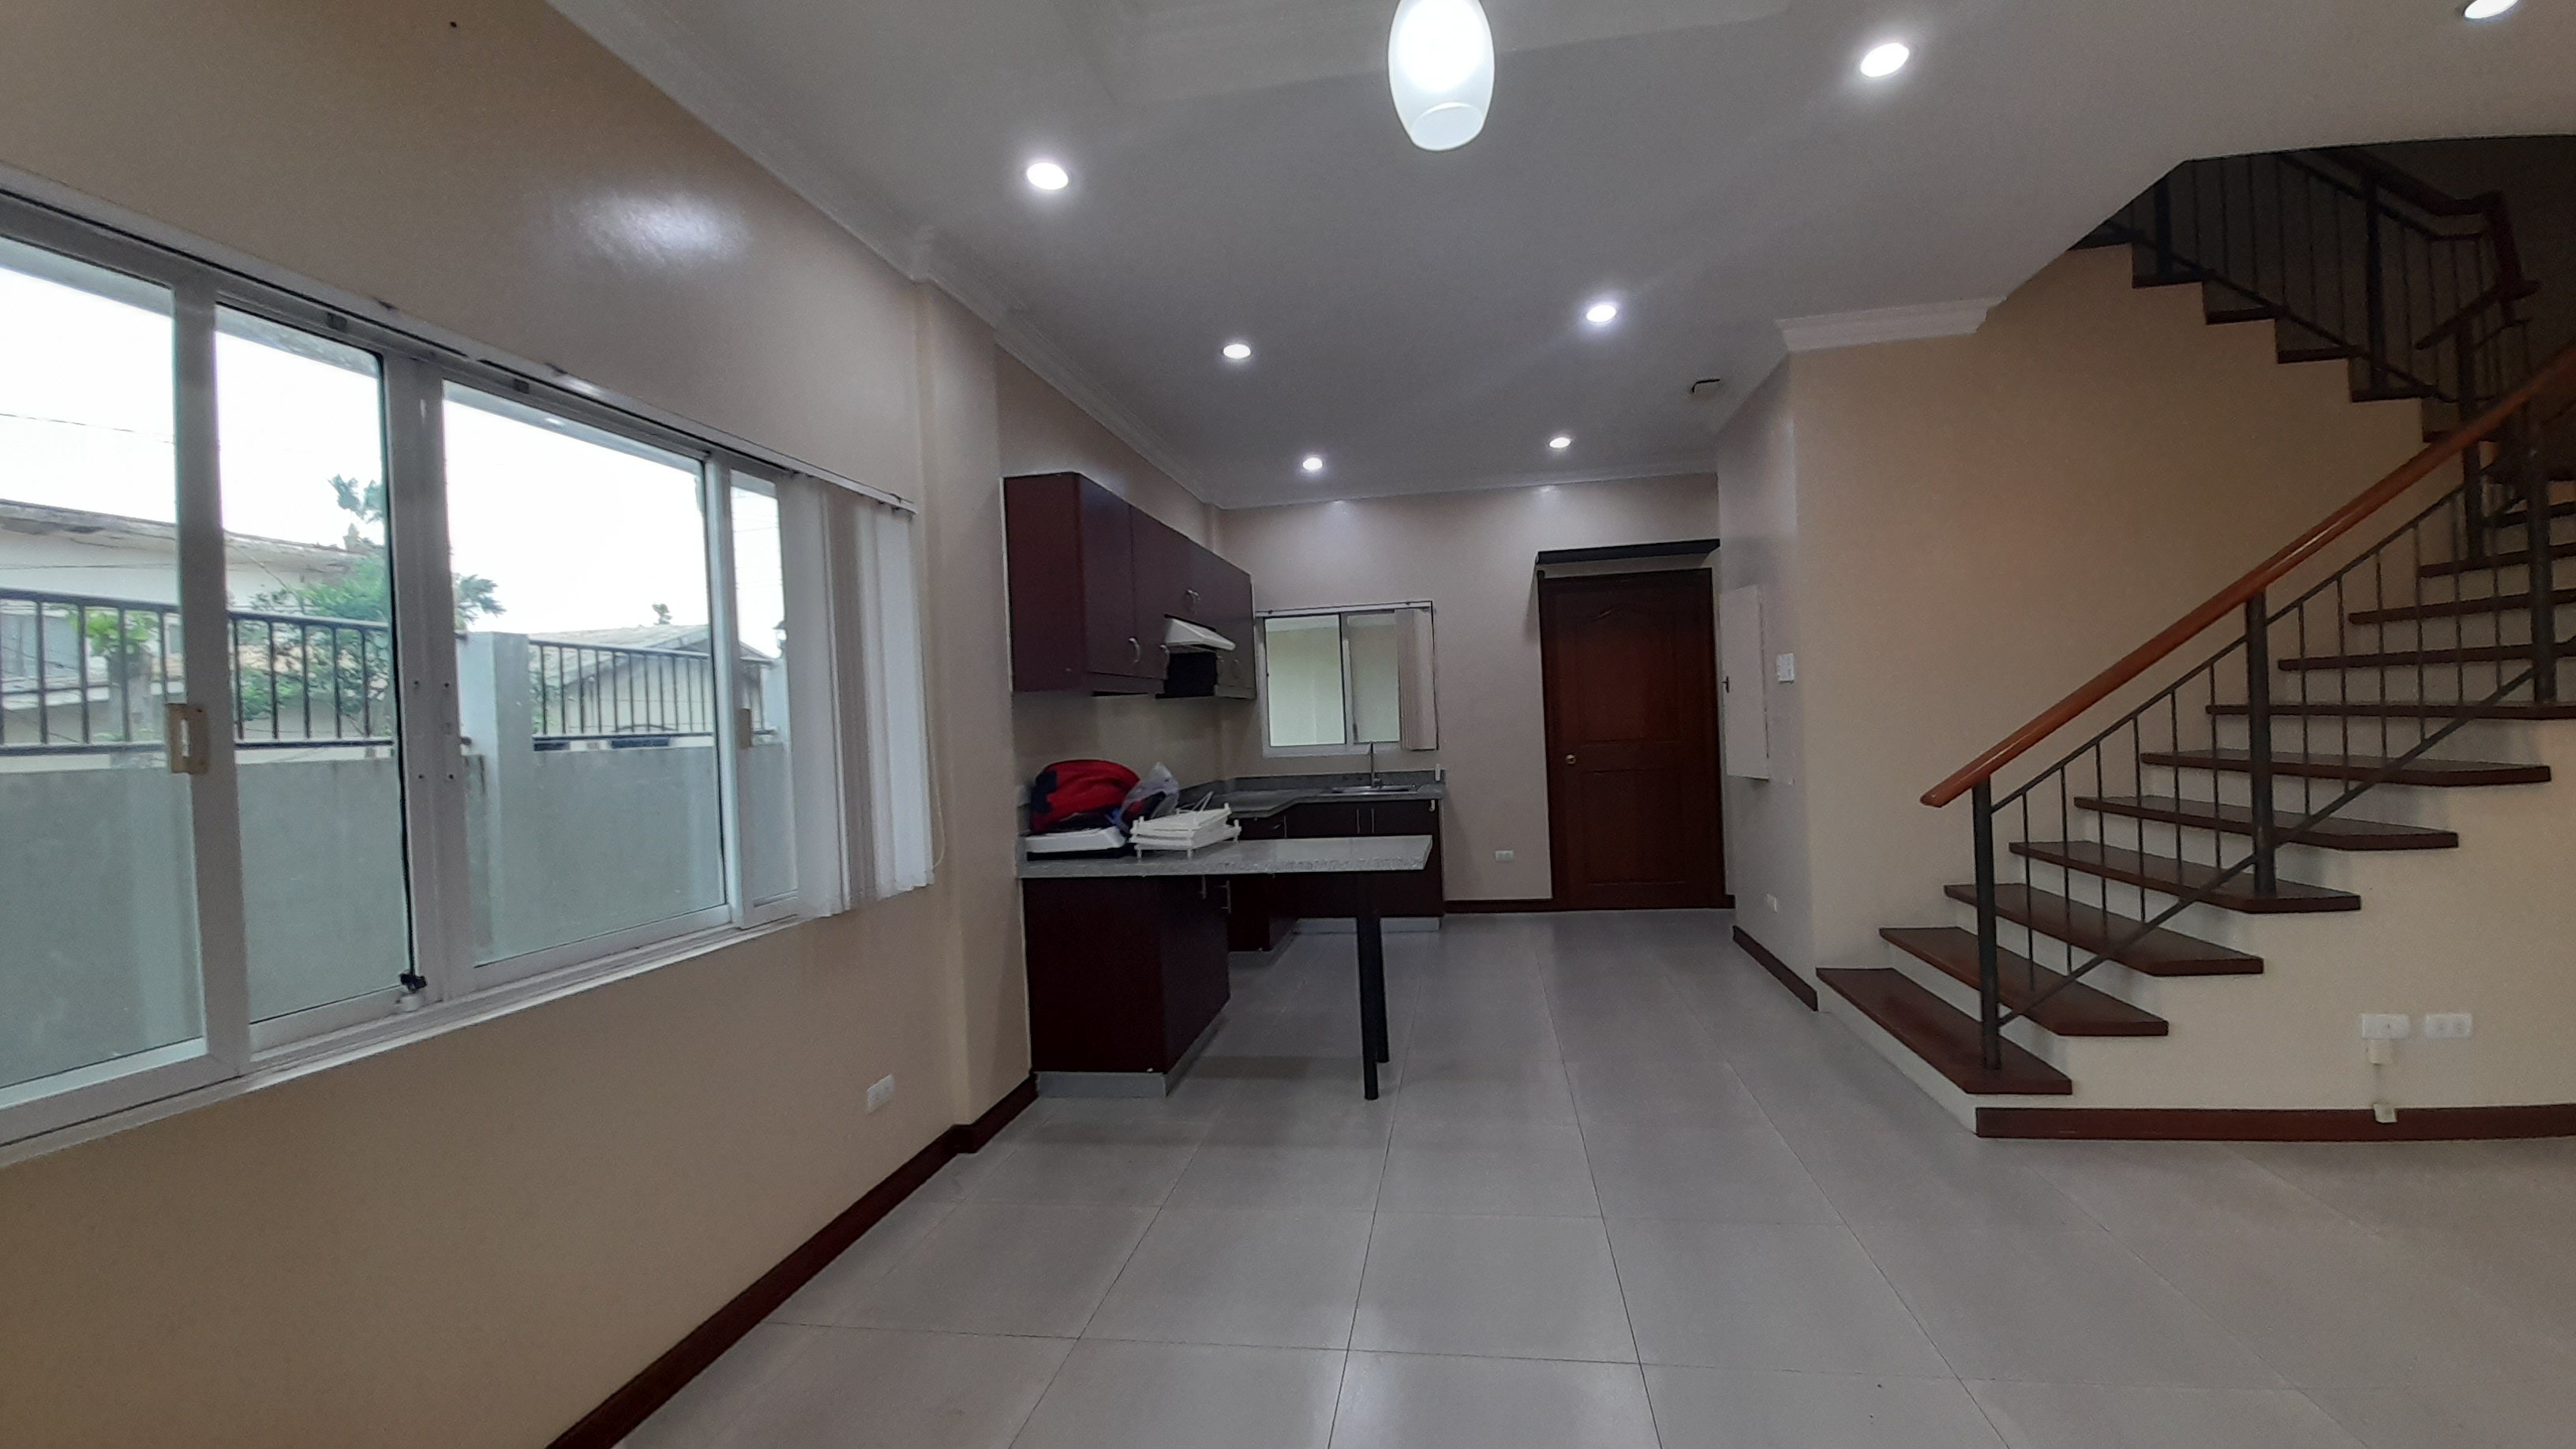 4-bedroom-and-unfurnished-house-in-mabolo-cebu-city-cebu